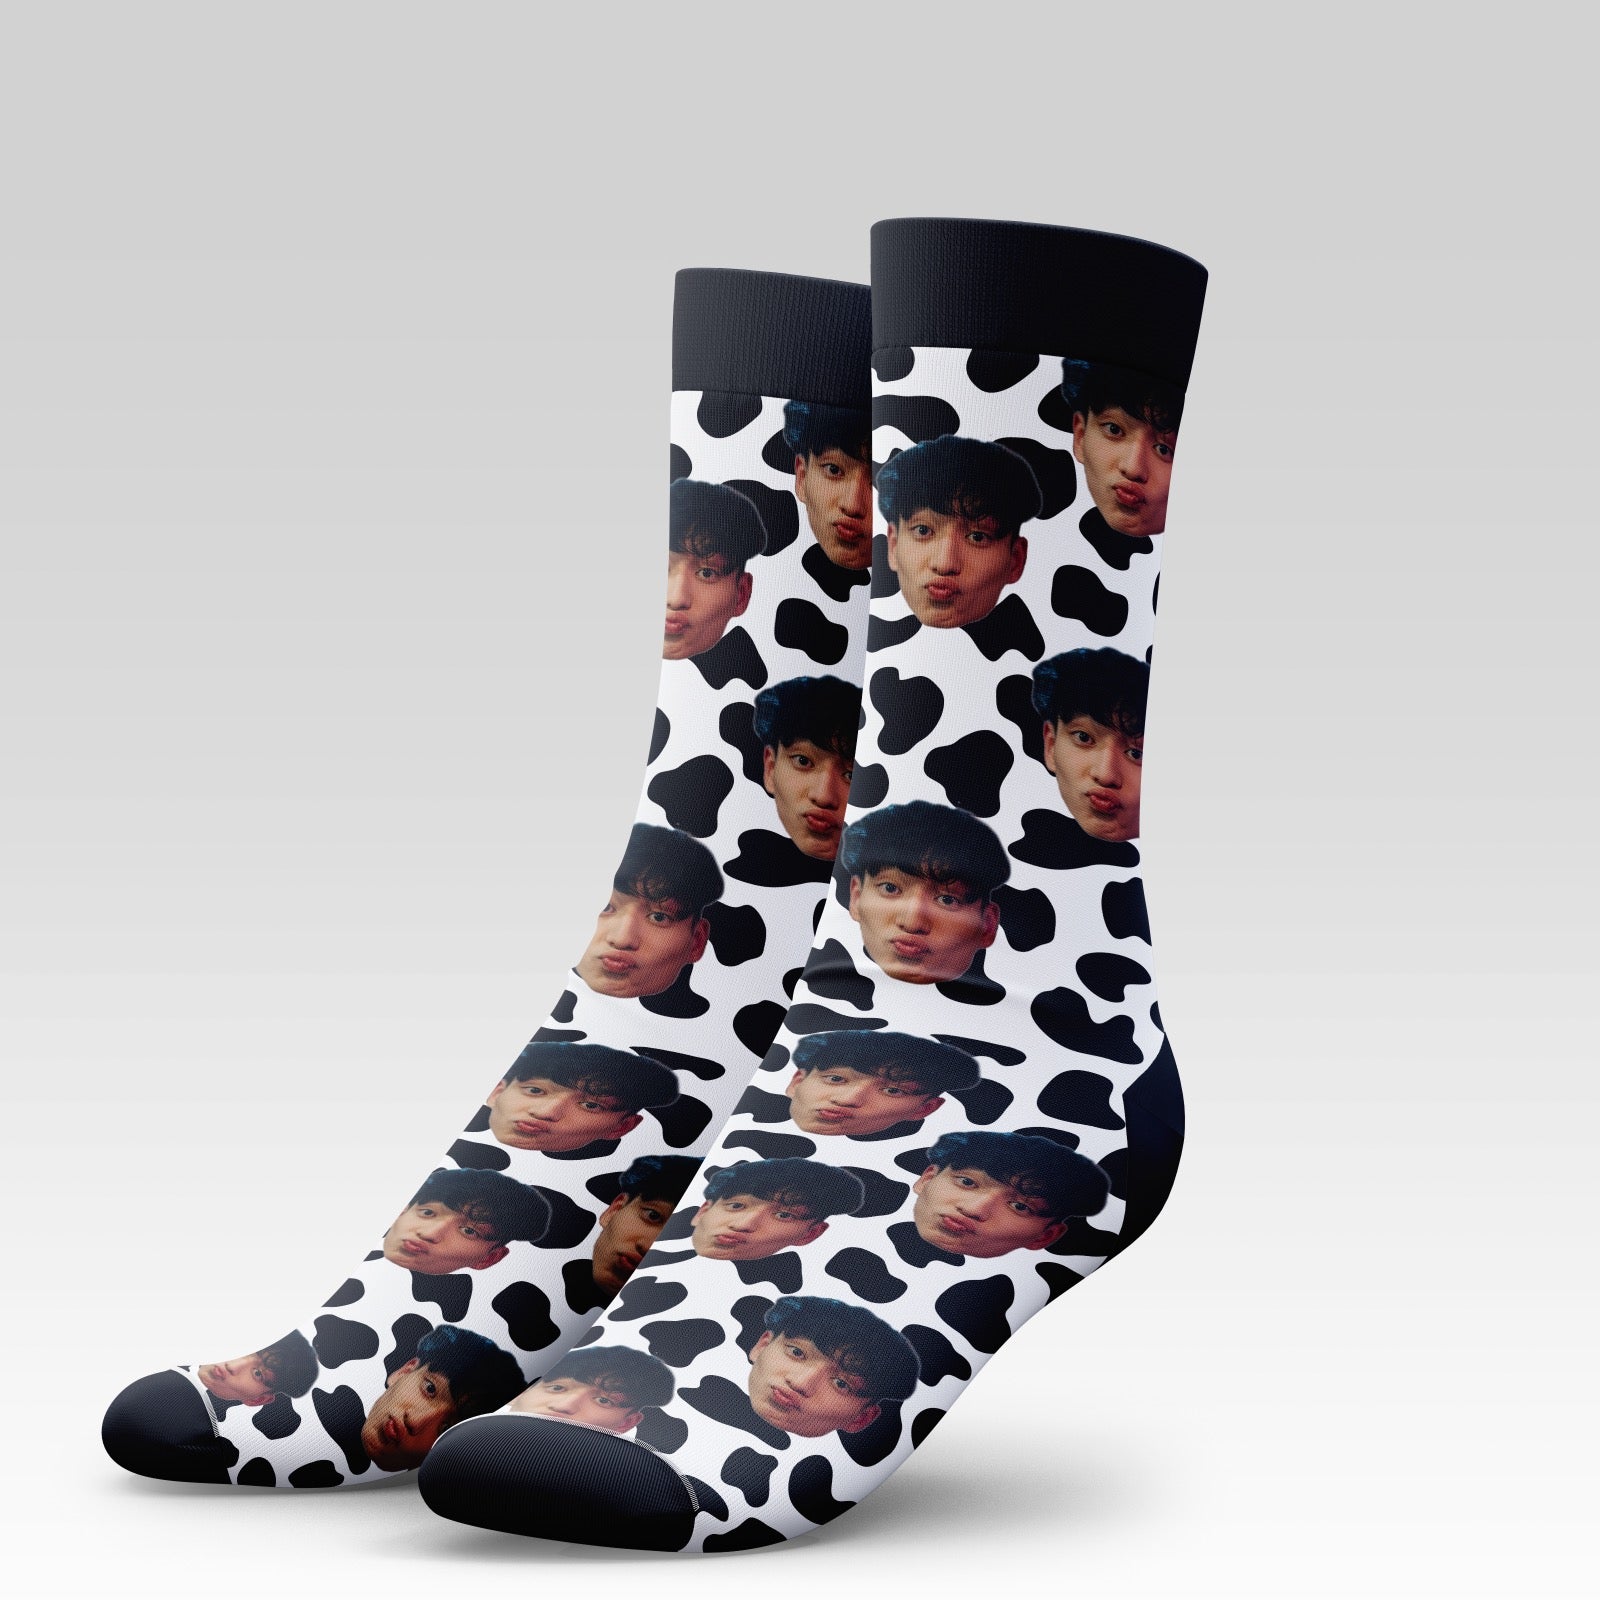 Custom Pet Socks in India  Put your pet's face on cute socks! – Fluff N'  Puff